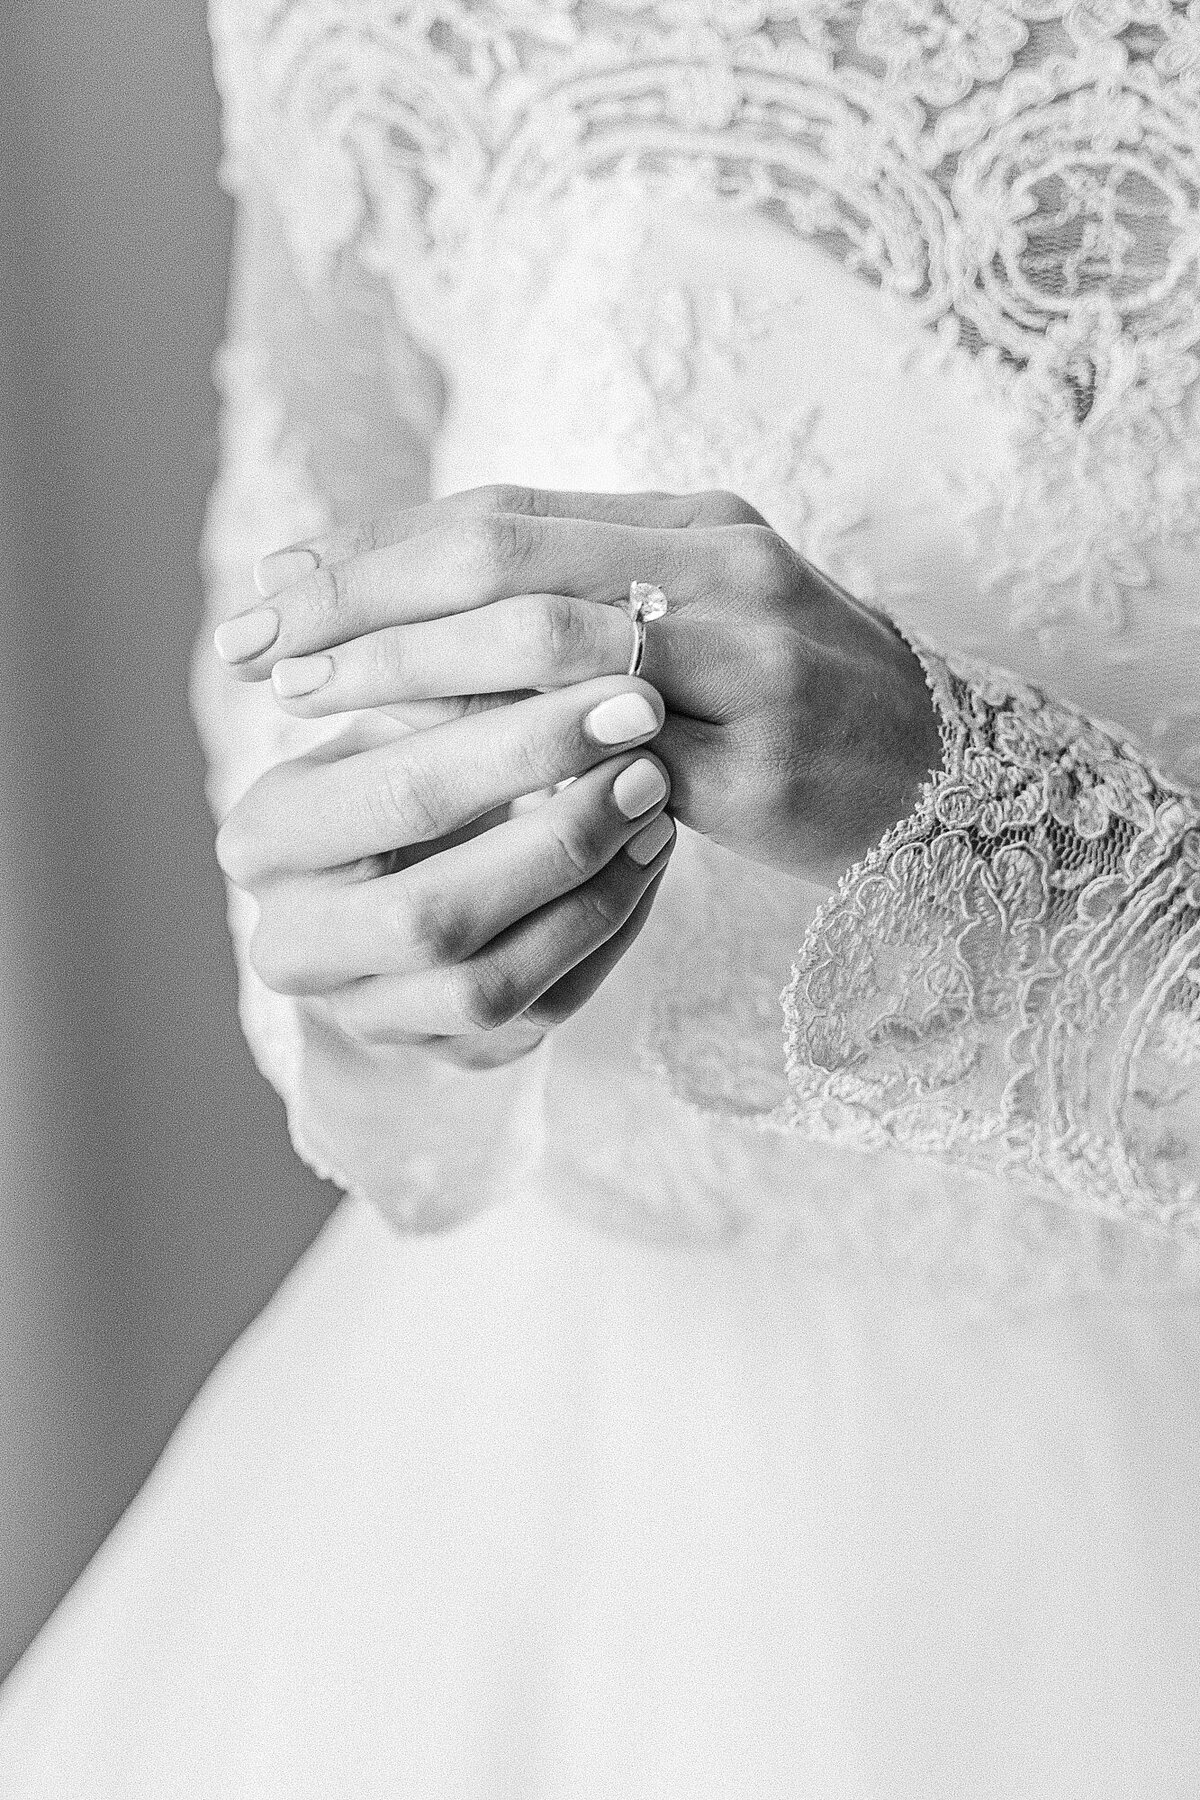 Bride adjusting her engagement ring before her intimate wedding ceremony